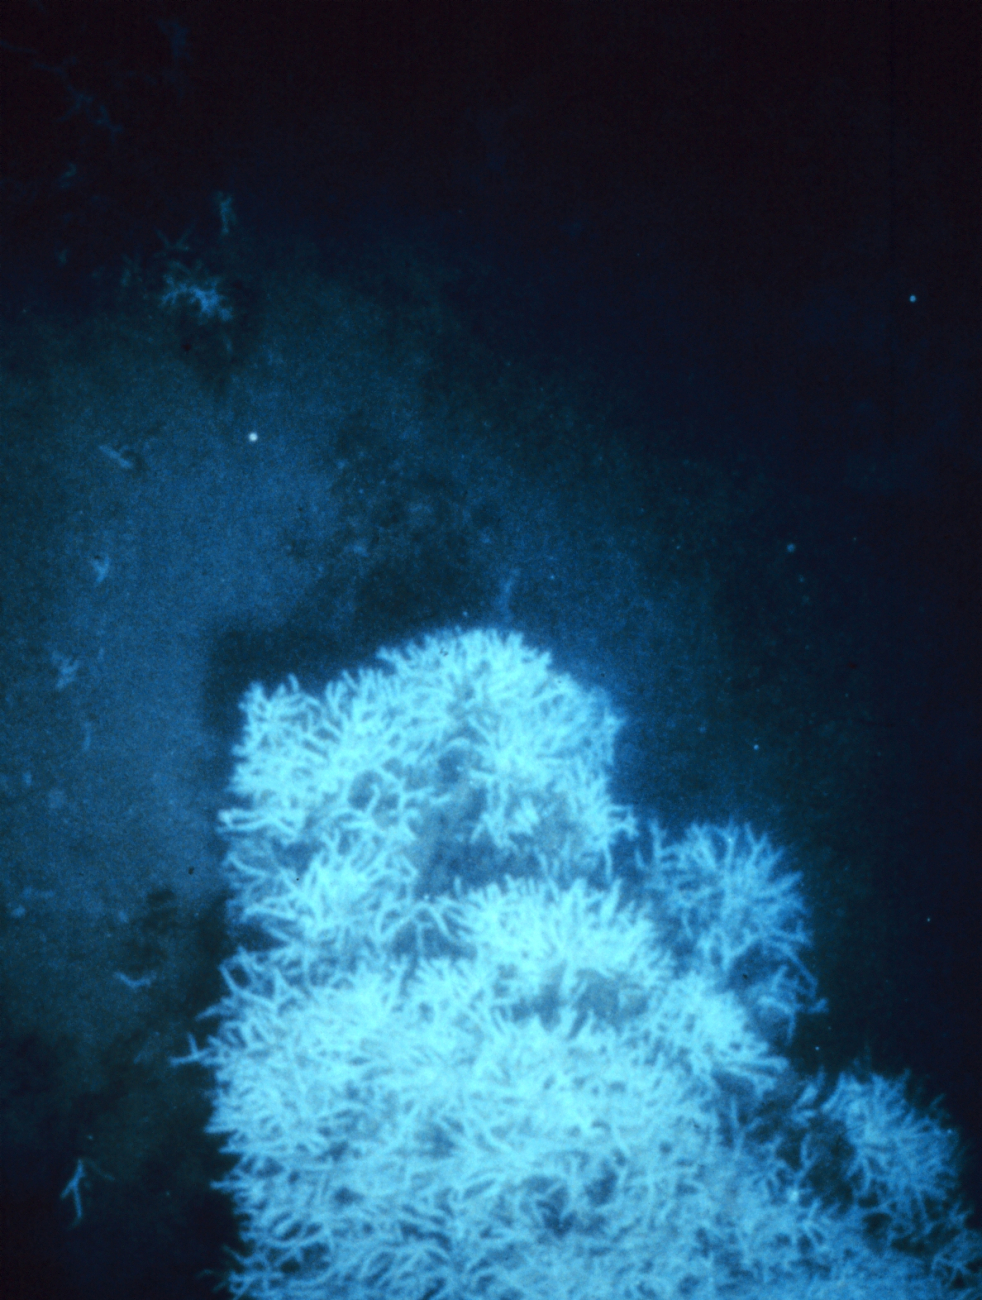 Live Oculina variosa coral